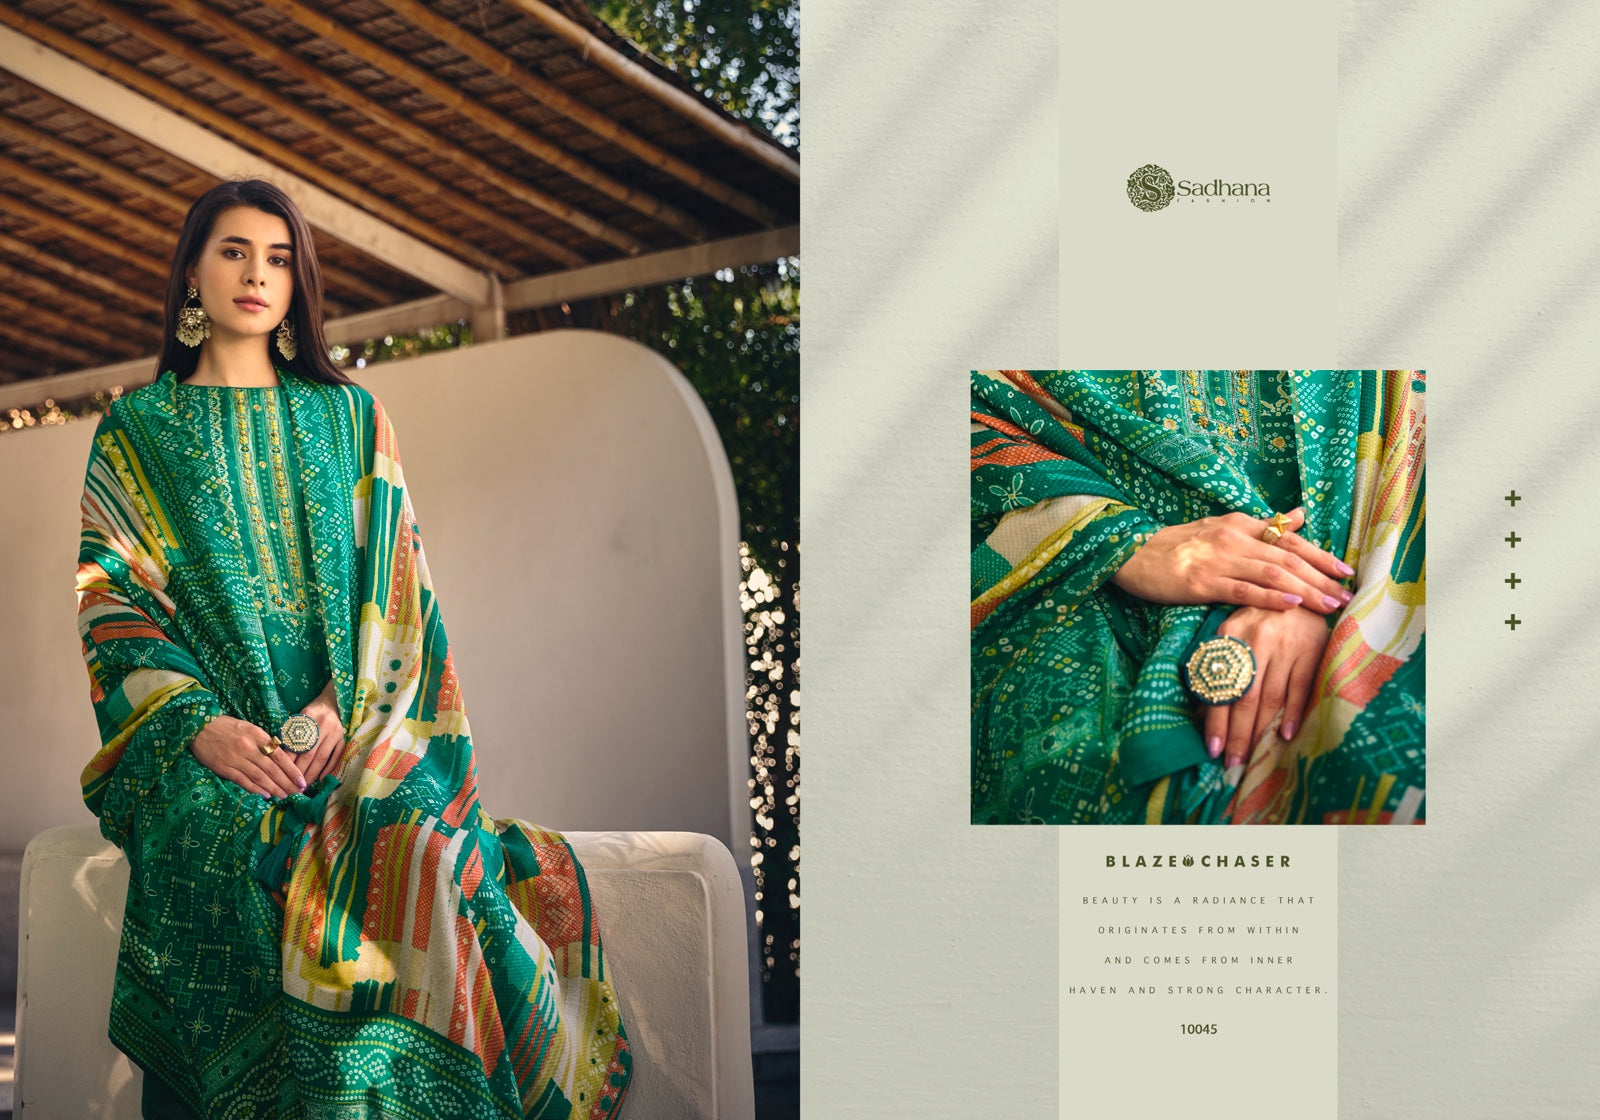 Inaayat Sadhana Muslin Silk Pant Style Suits